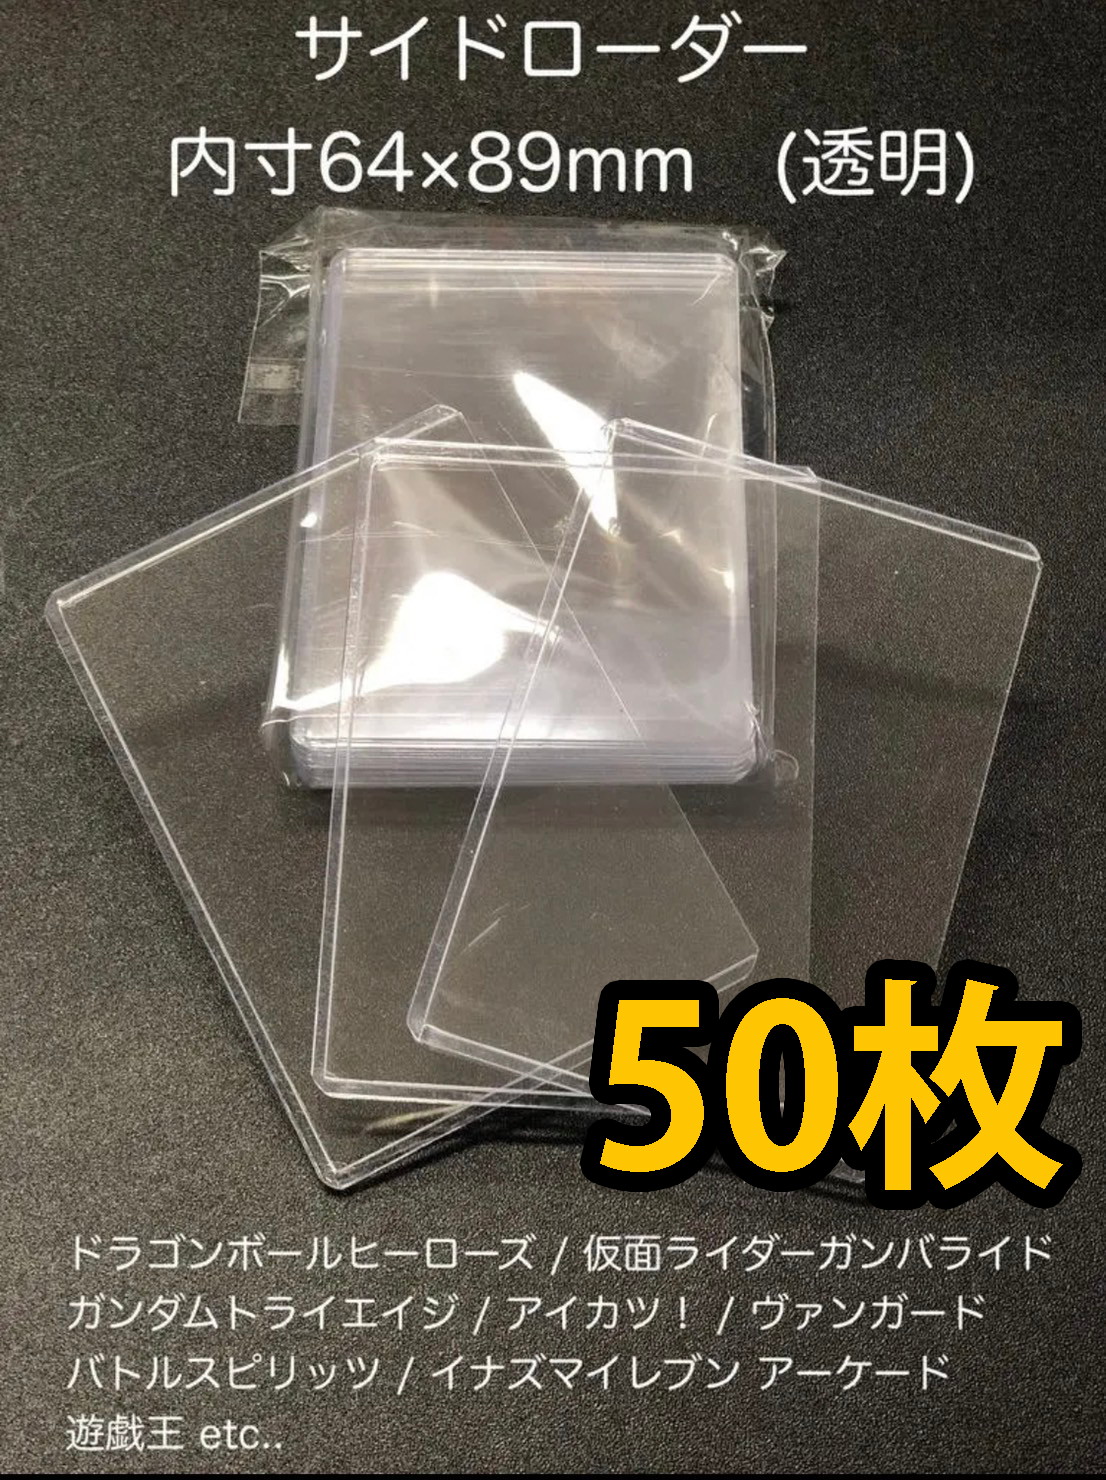 【64x89】カードローダー 50枚(5パック)